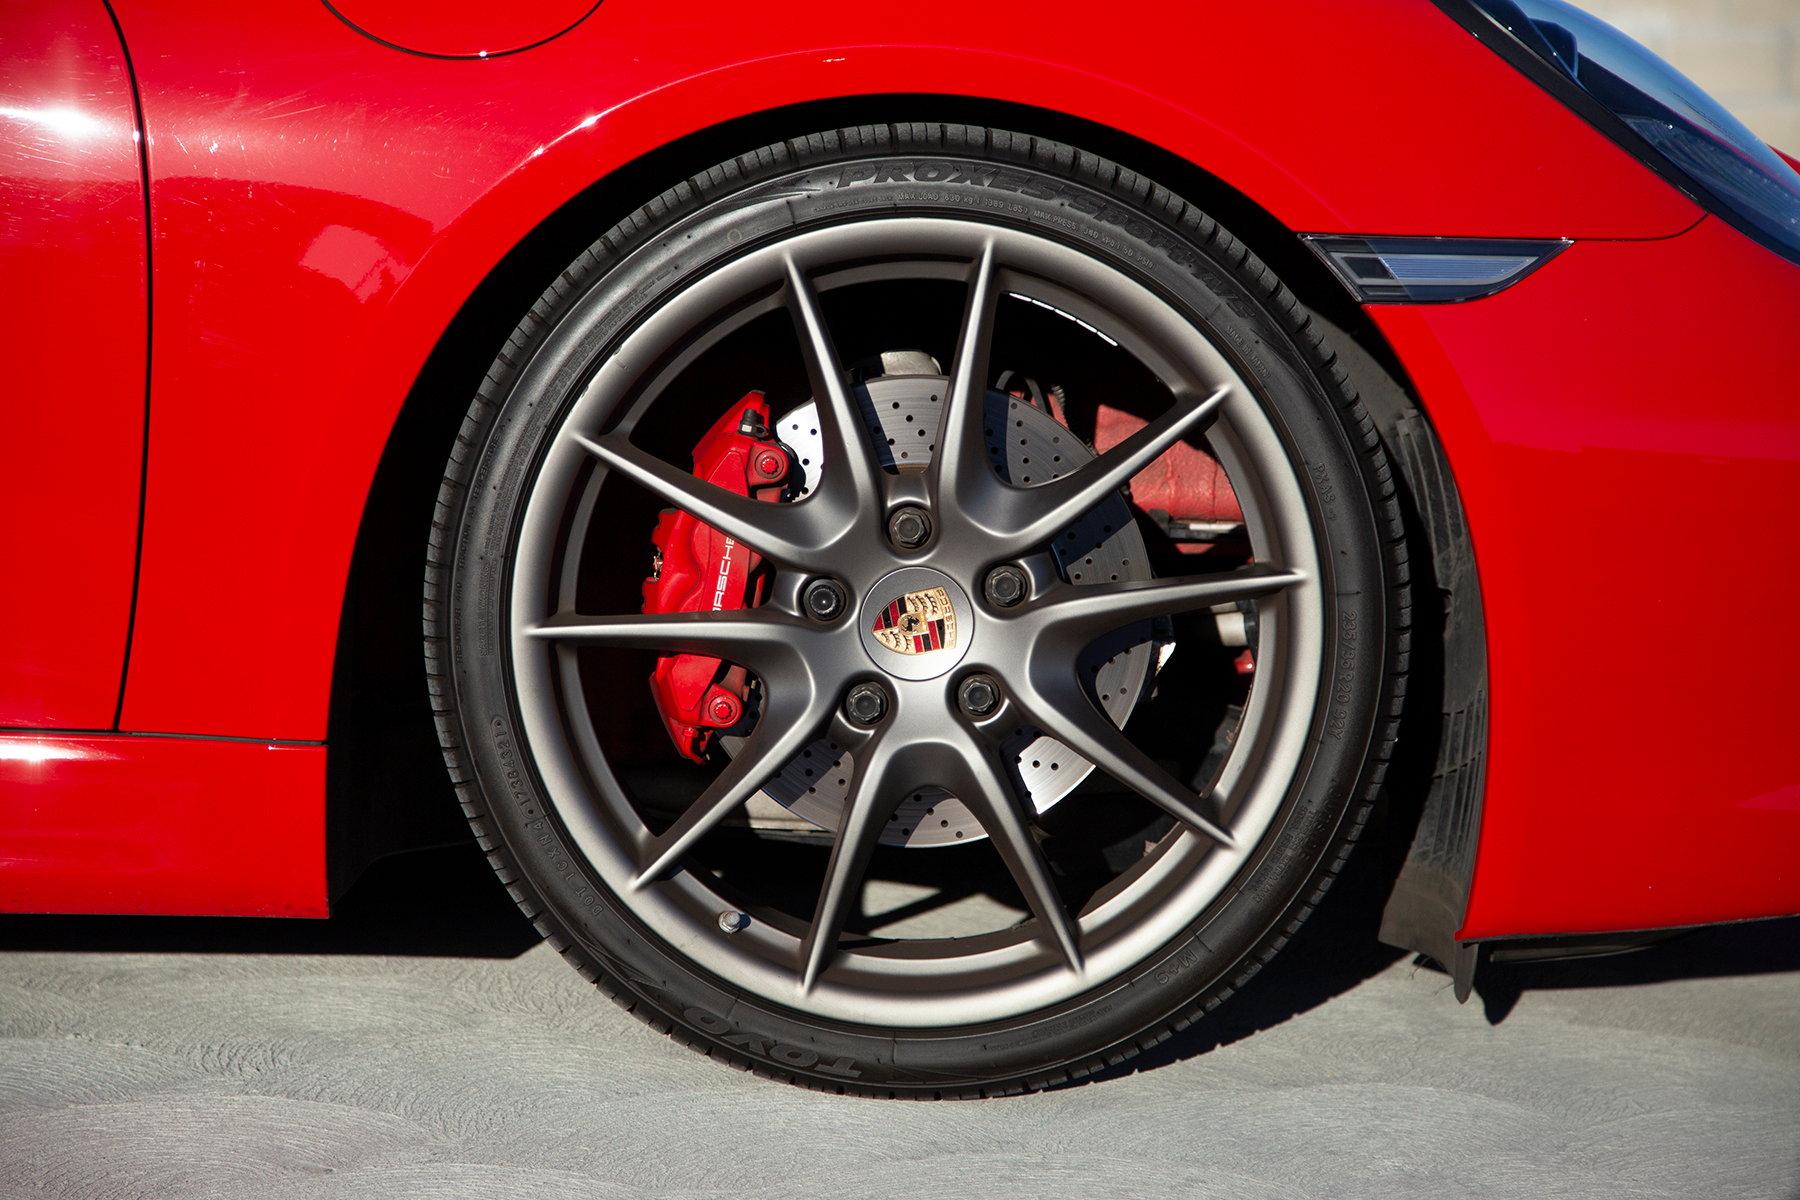 2014 Porsche Cayman - 2014 Cayman S - Guards Red, 23k miles, 6-speed, PTV, PASM, Apple Carplay, DSC'ed - Used - VIN WP0AB2A88EK193699 - Irvine, CA 92614, United States